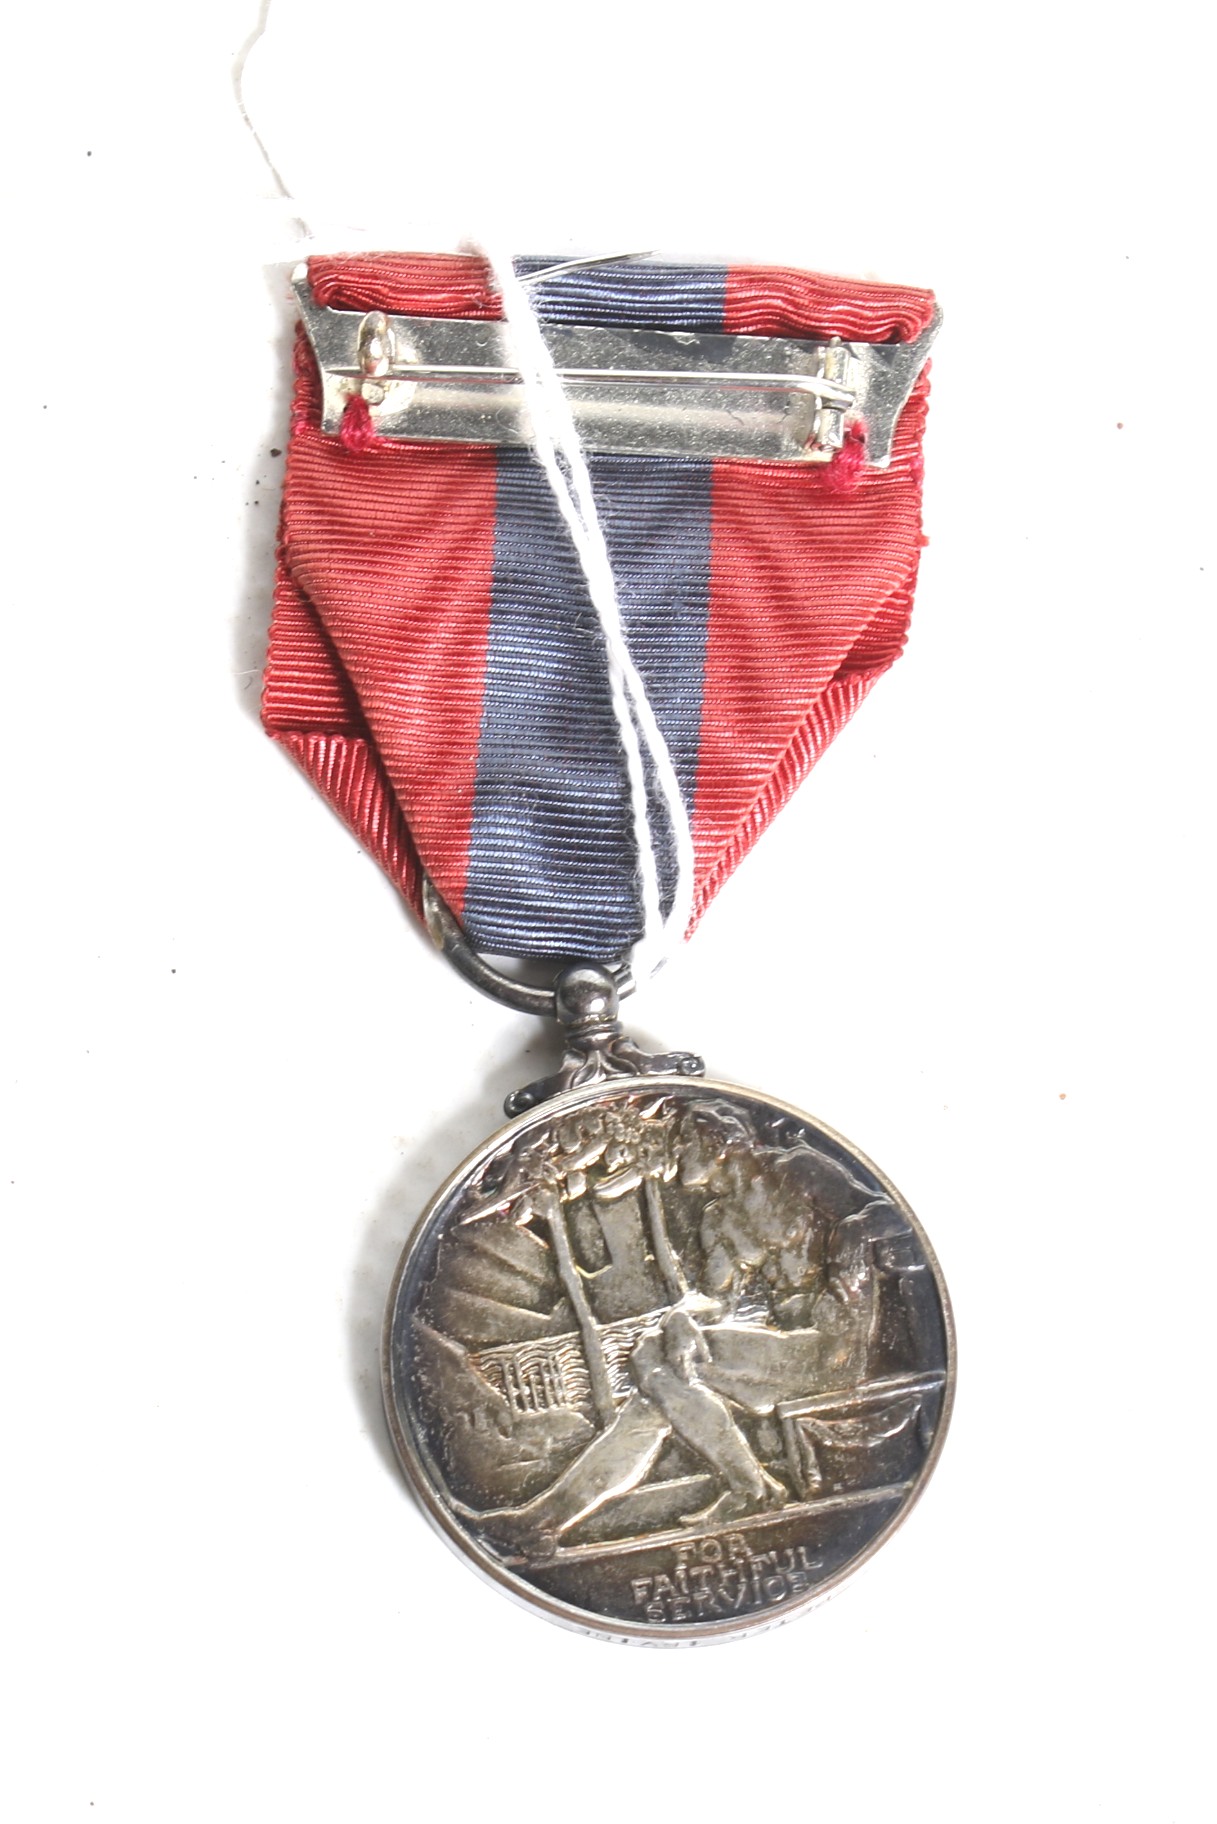 Elizabeth II Faithful Service Medal awarded to Peter Irvine, Royal Mint, in original box. - Image 2 of 2